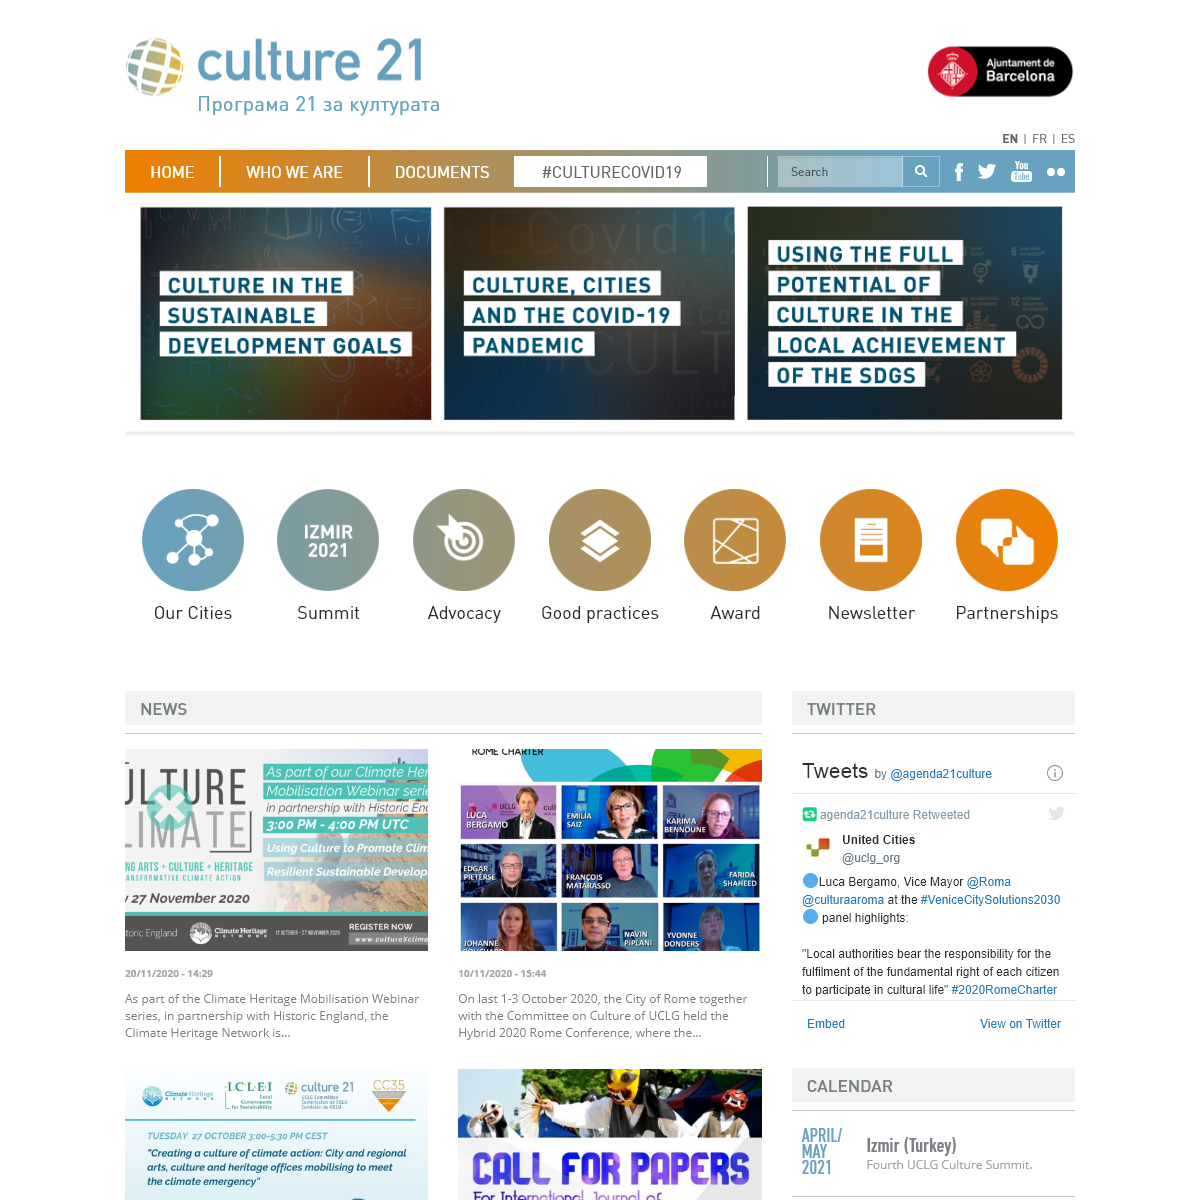 A complete backup of agenda21culture.net